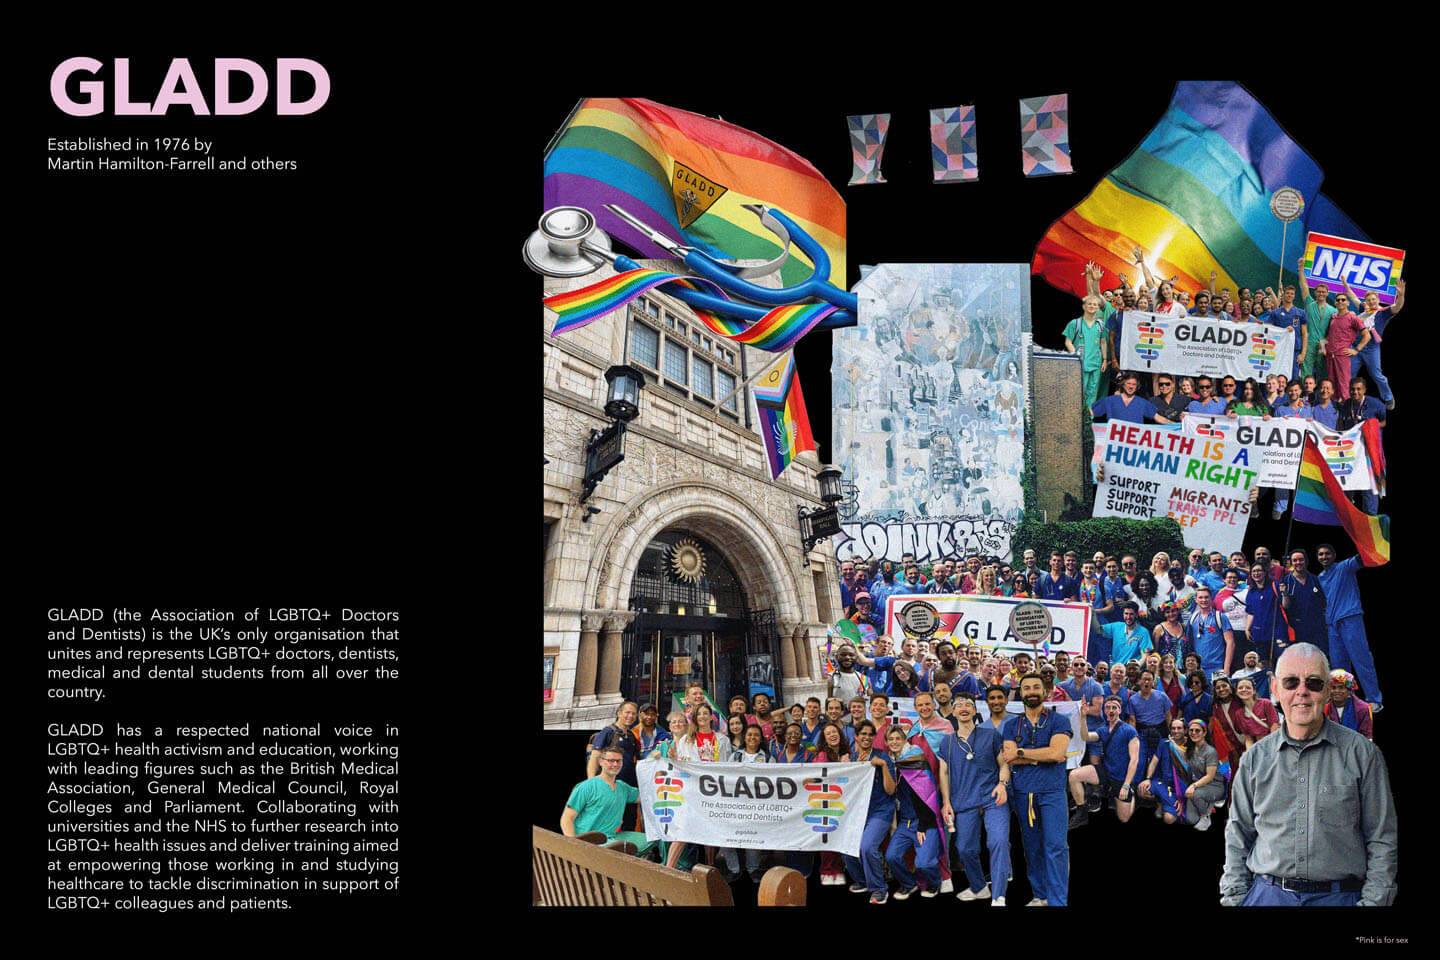 Poster celebrating GLADD (the Association of LGBTQ+ Doctors and Dentists, established 1976)